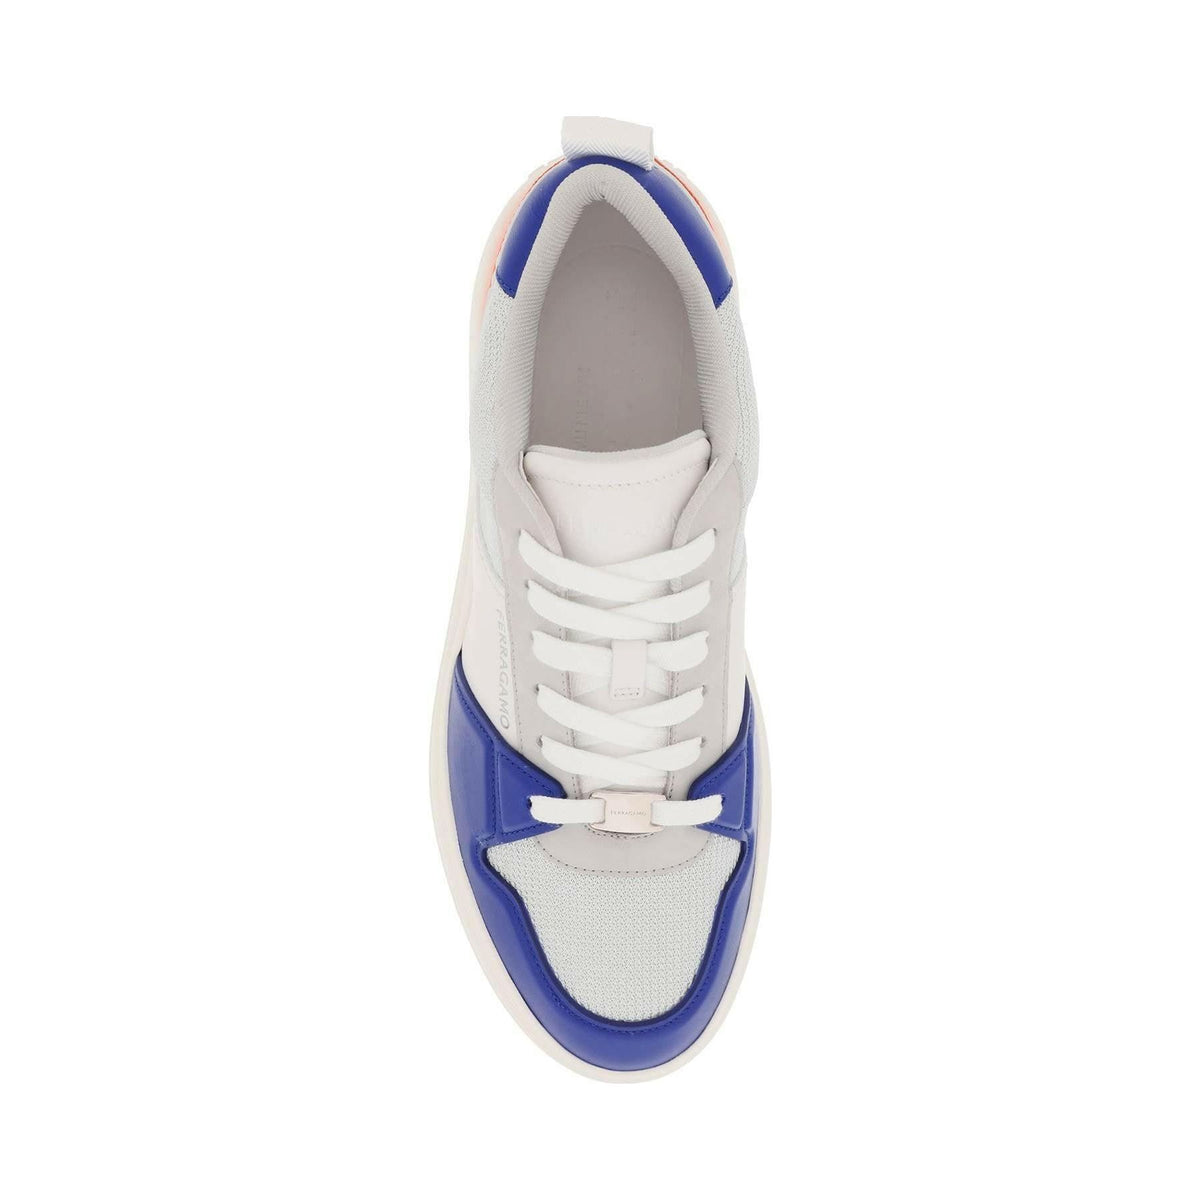 FERRAGAMO - White, Grey and Lapis Lazuli Low Cut Sneakers - JOHN JULIA